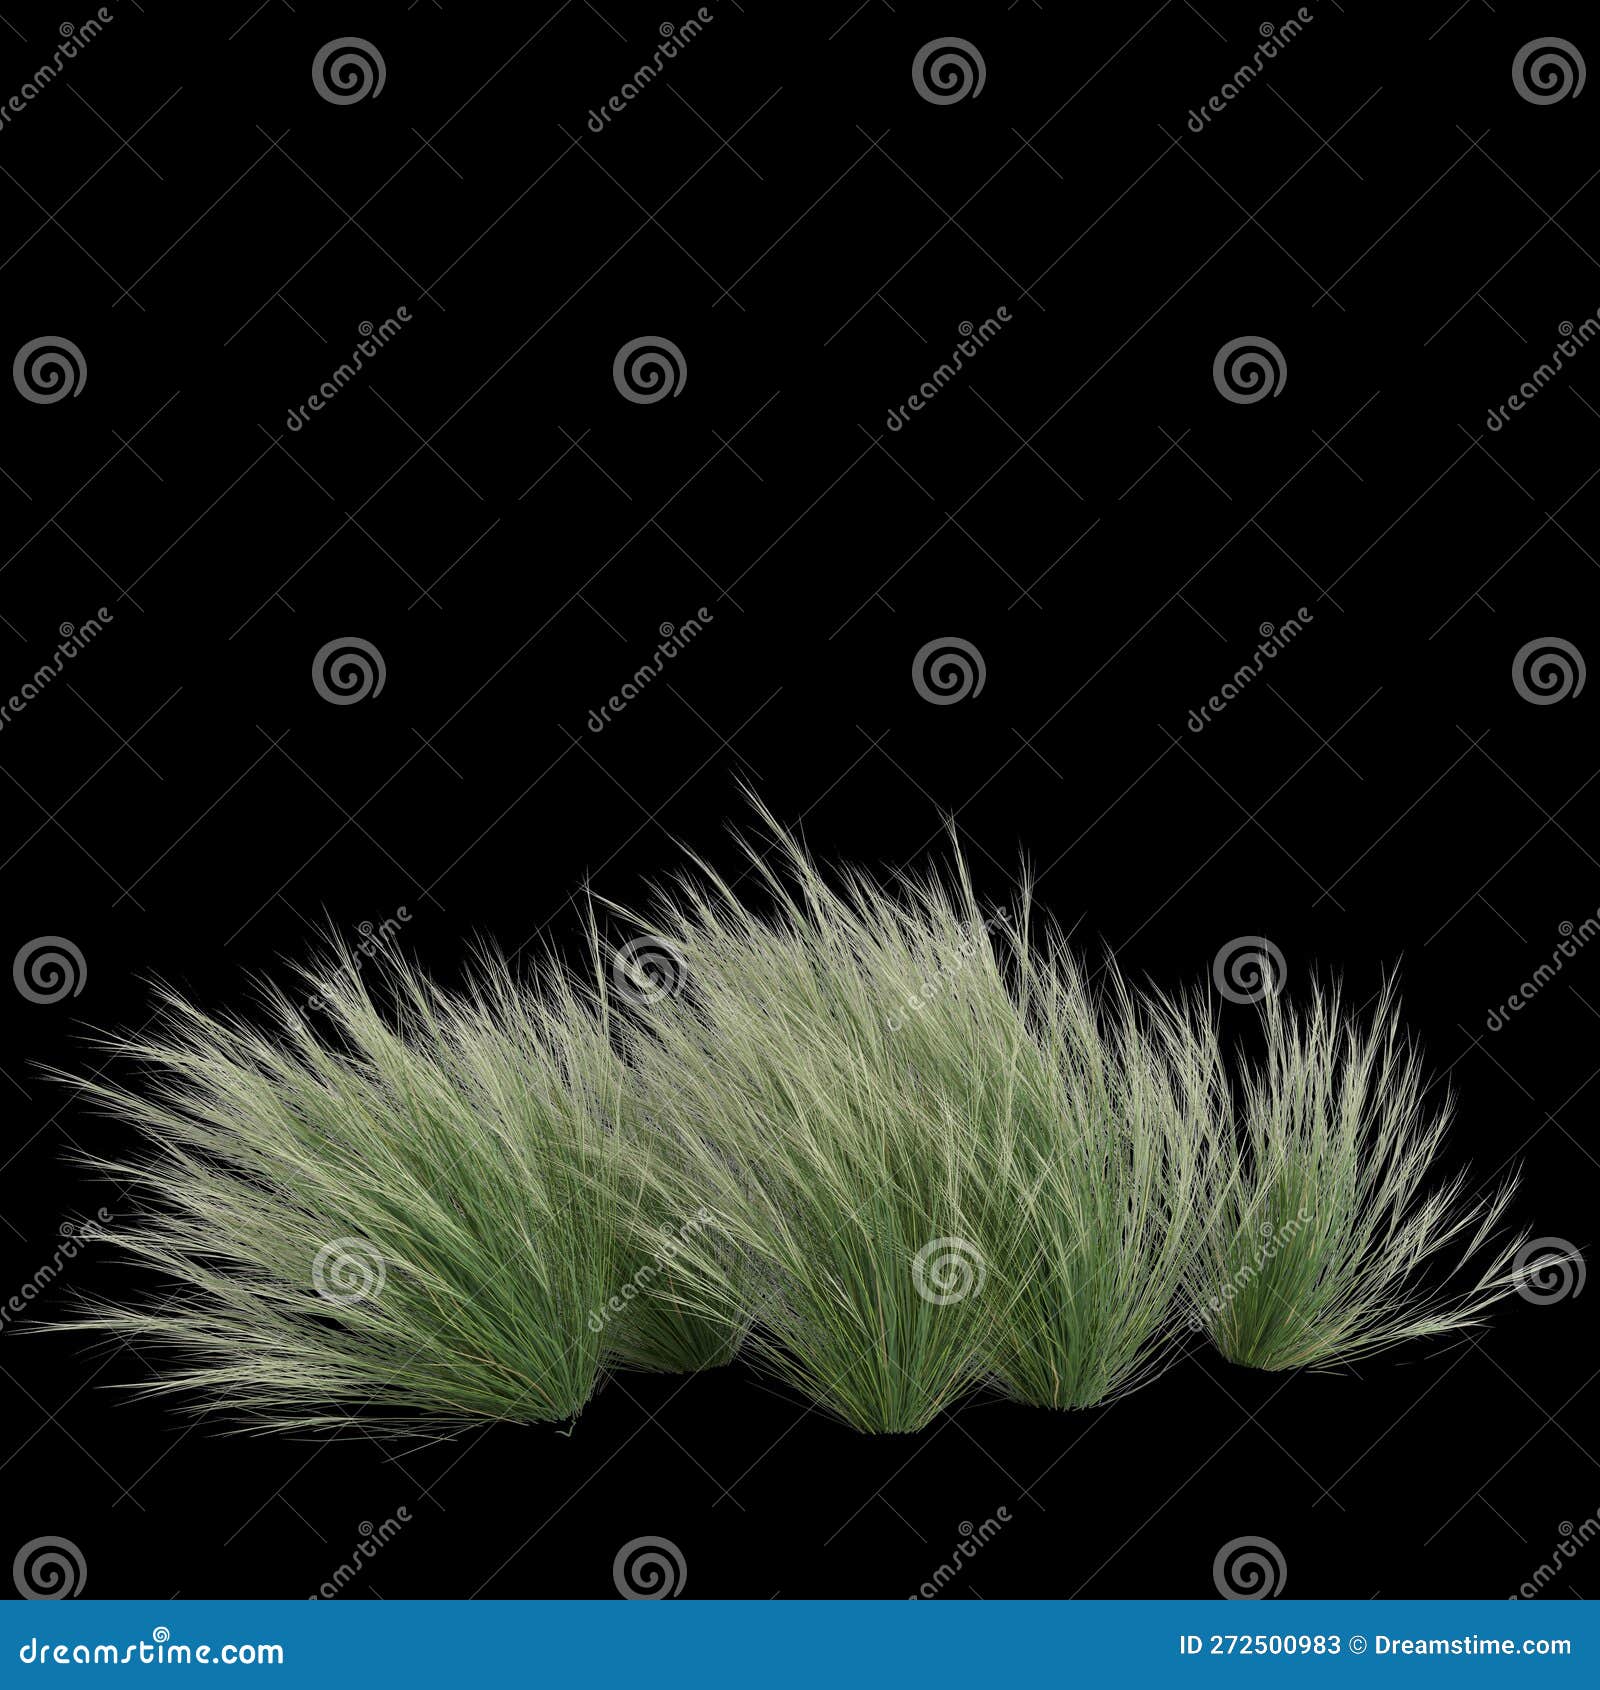 3d Illustration Of Set Nassella Tenuissima Grass Isolated On Black ...